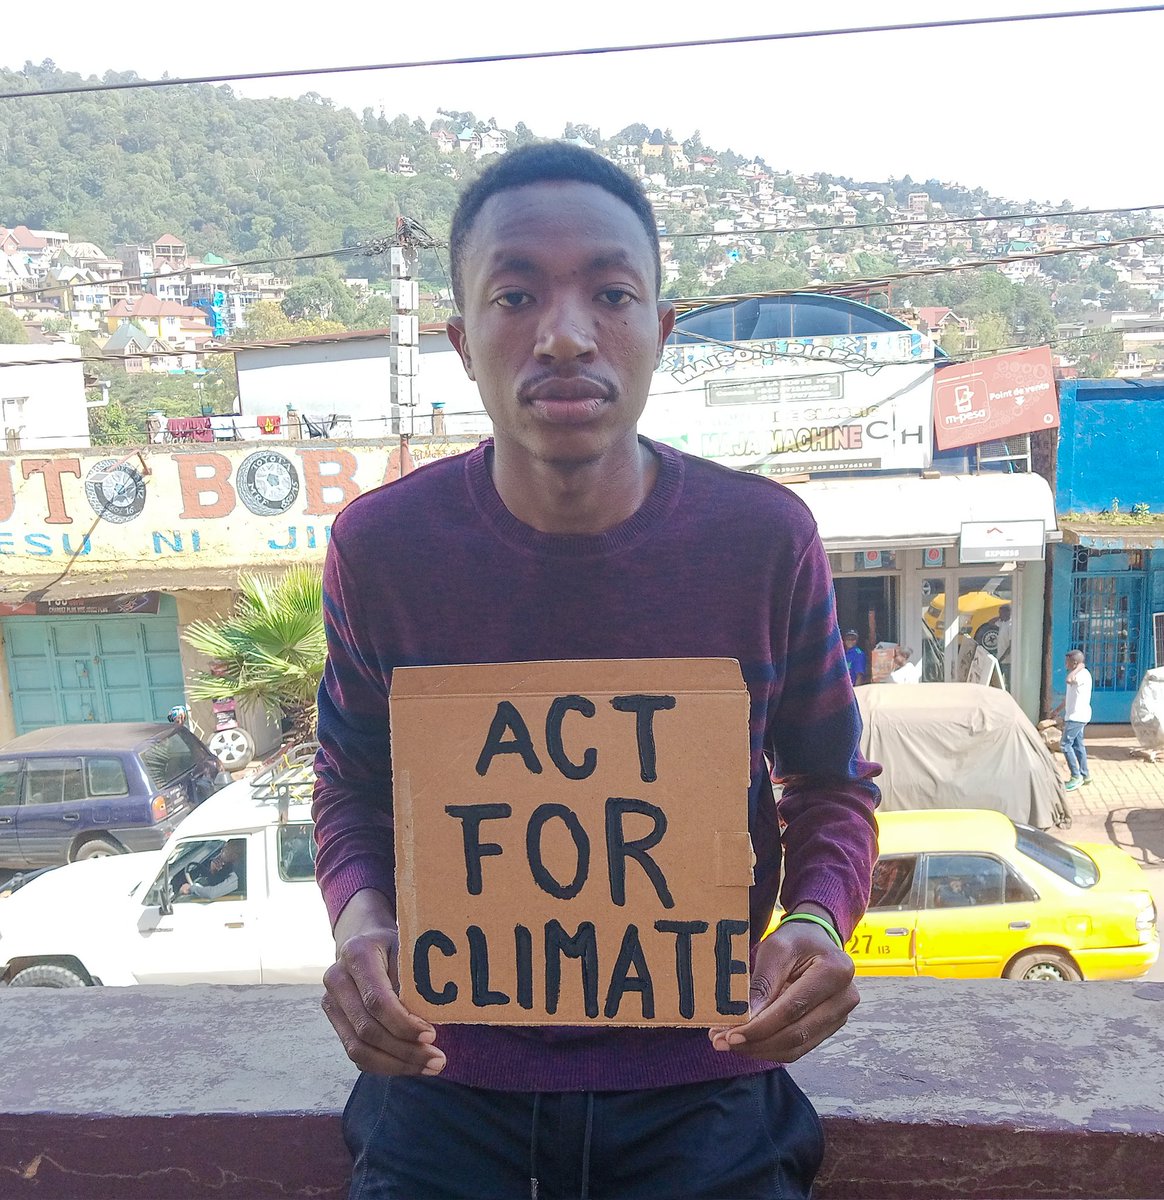 Act For climate
#FridaysForFuture #ClimateStrike #TomorrowIsTooLate